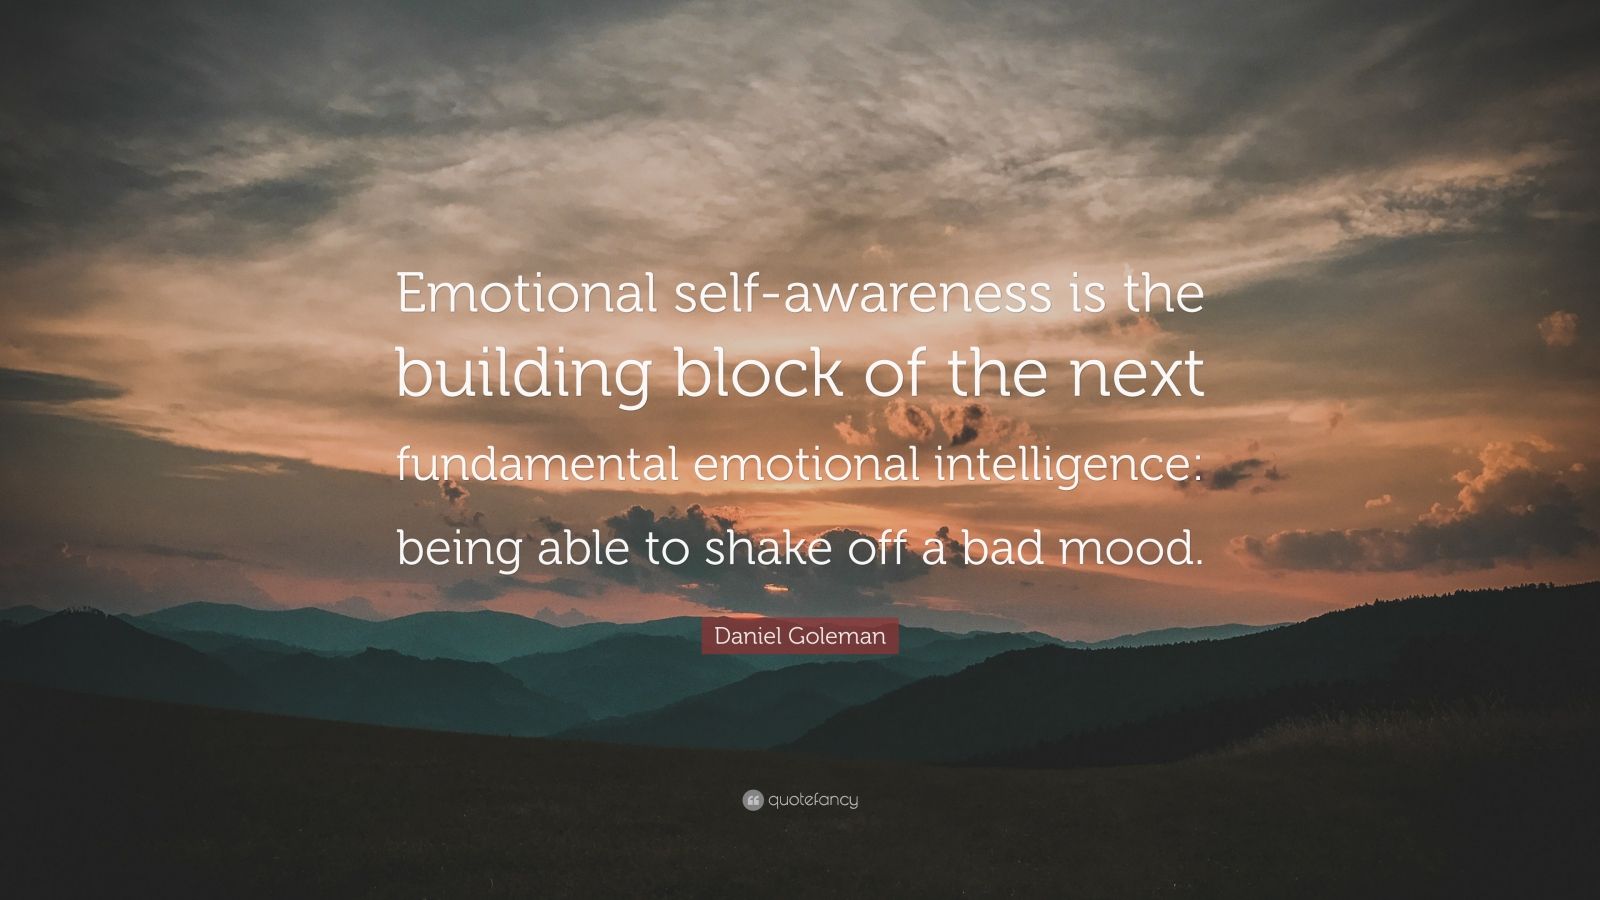 Daniel Goleman Quote “Emotional selfawareness is the